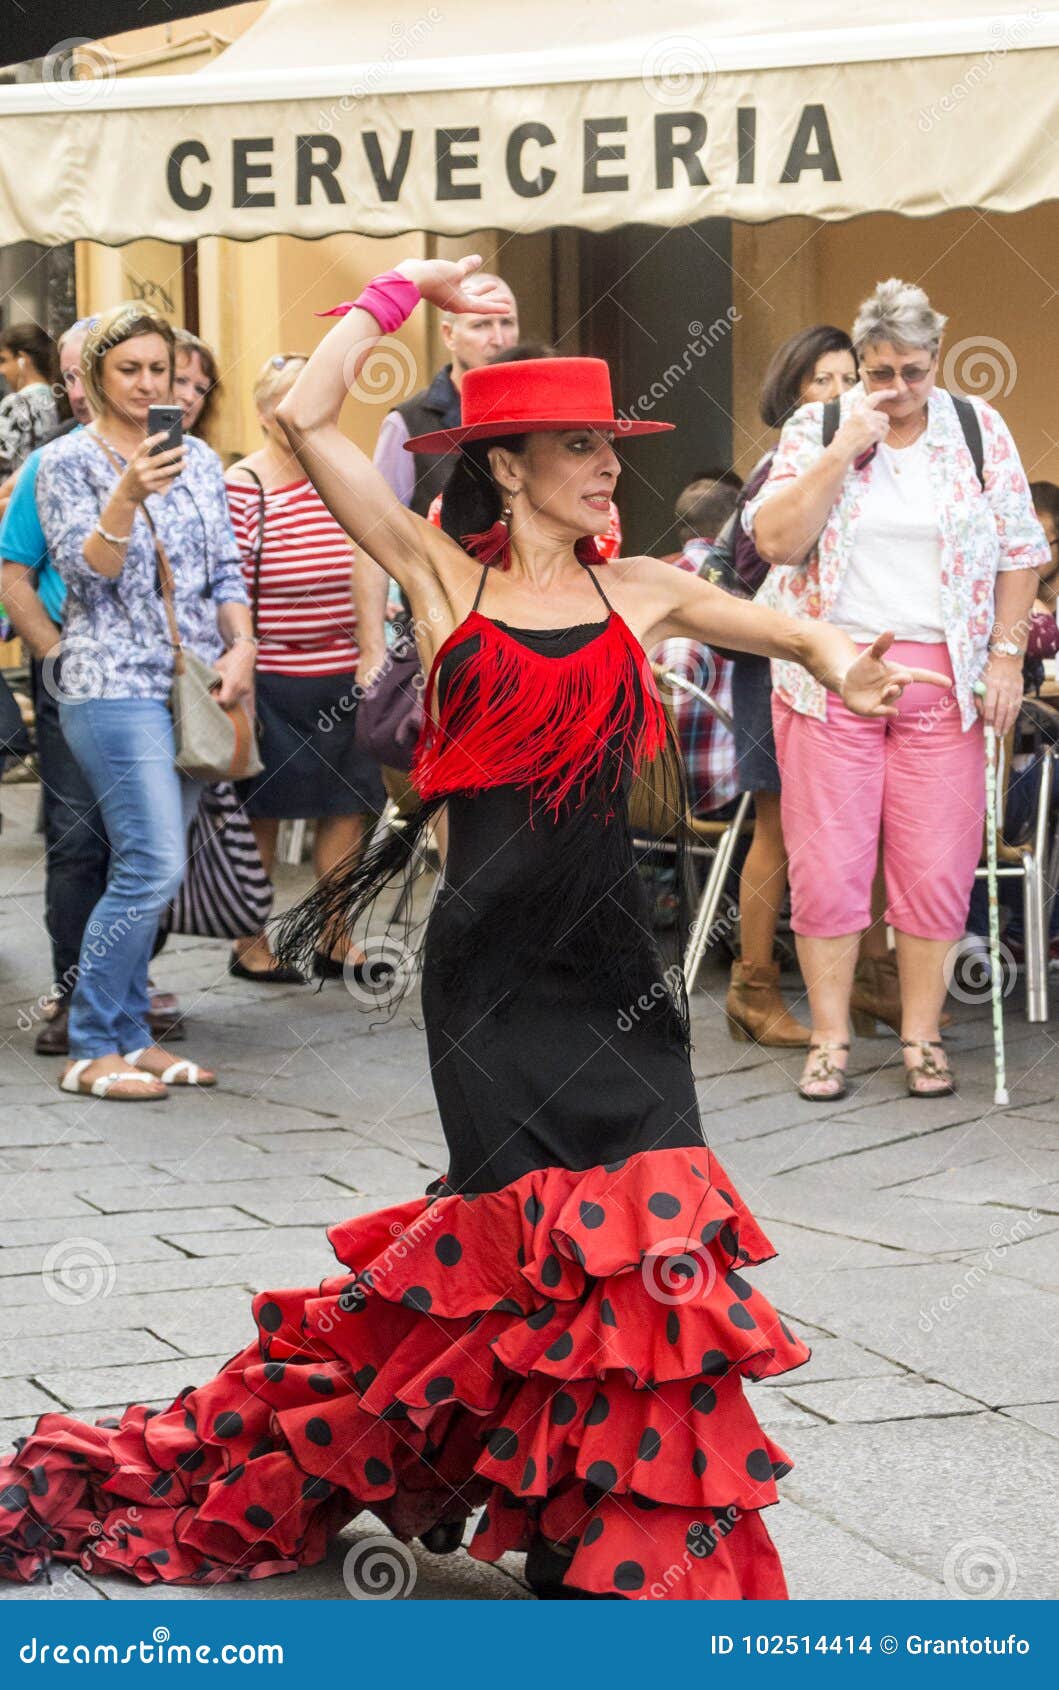 Gypsy Dancing Flamenco Editorial Stock Image Image Of Dancer 102514414